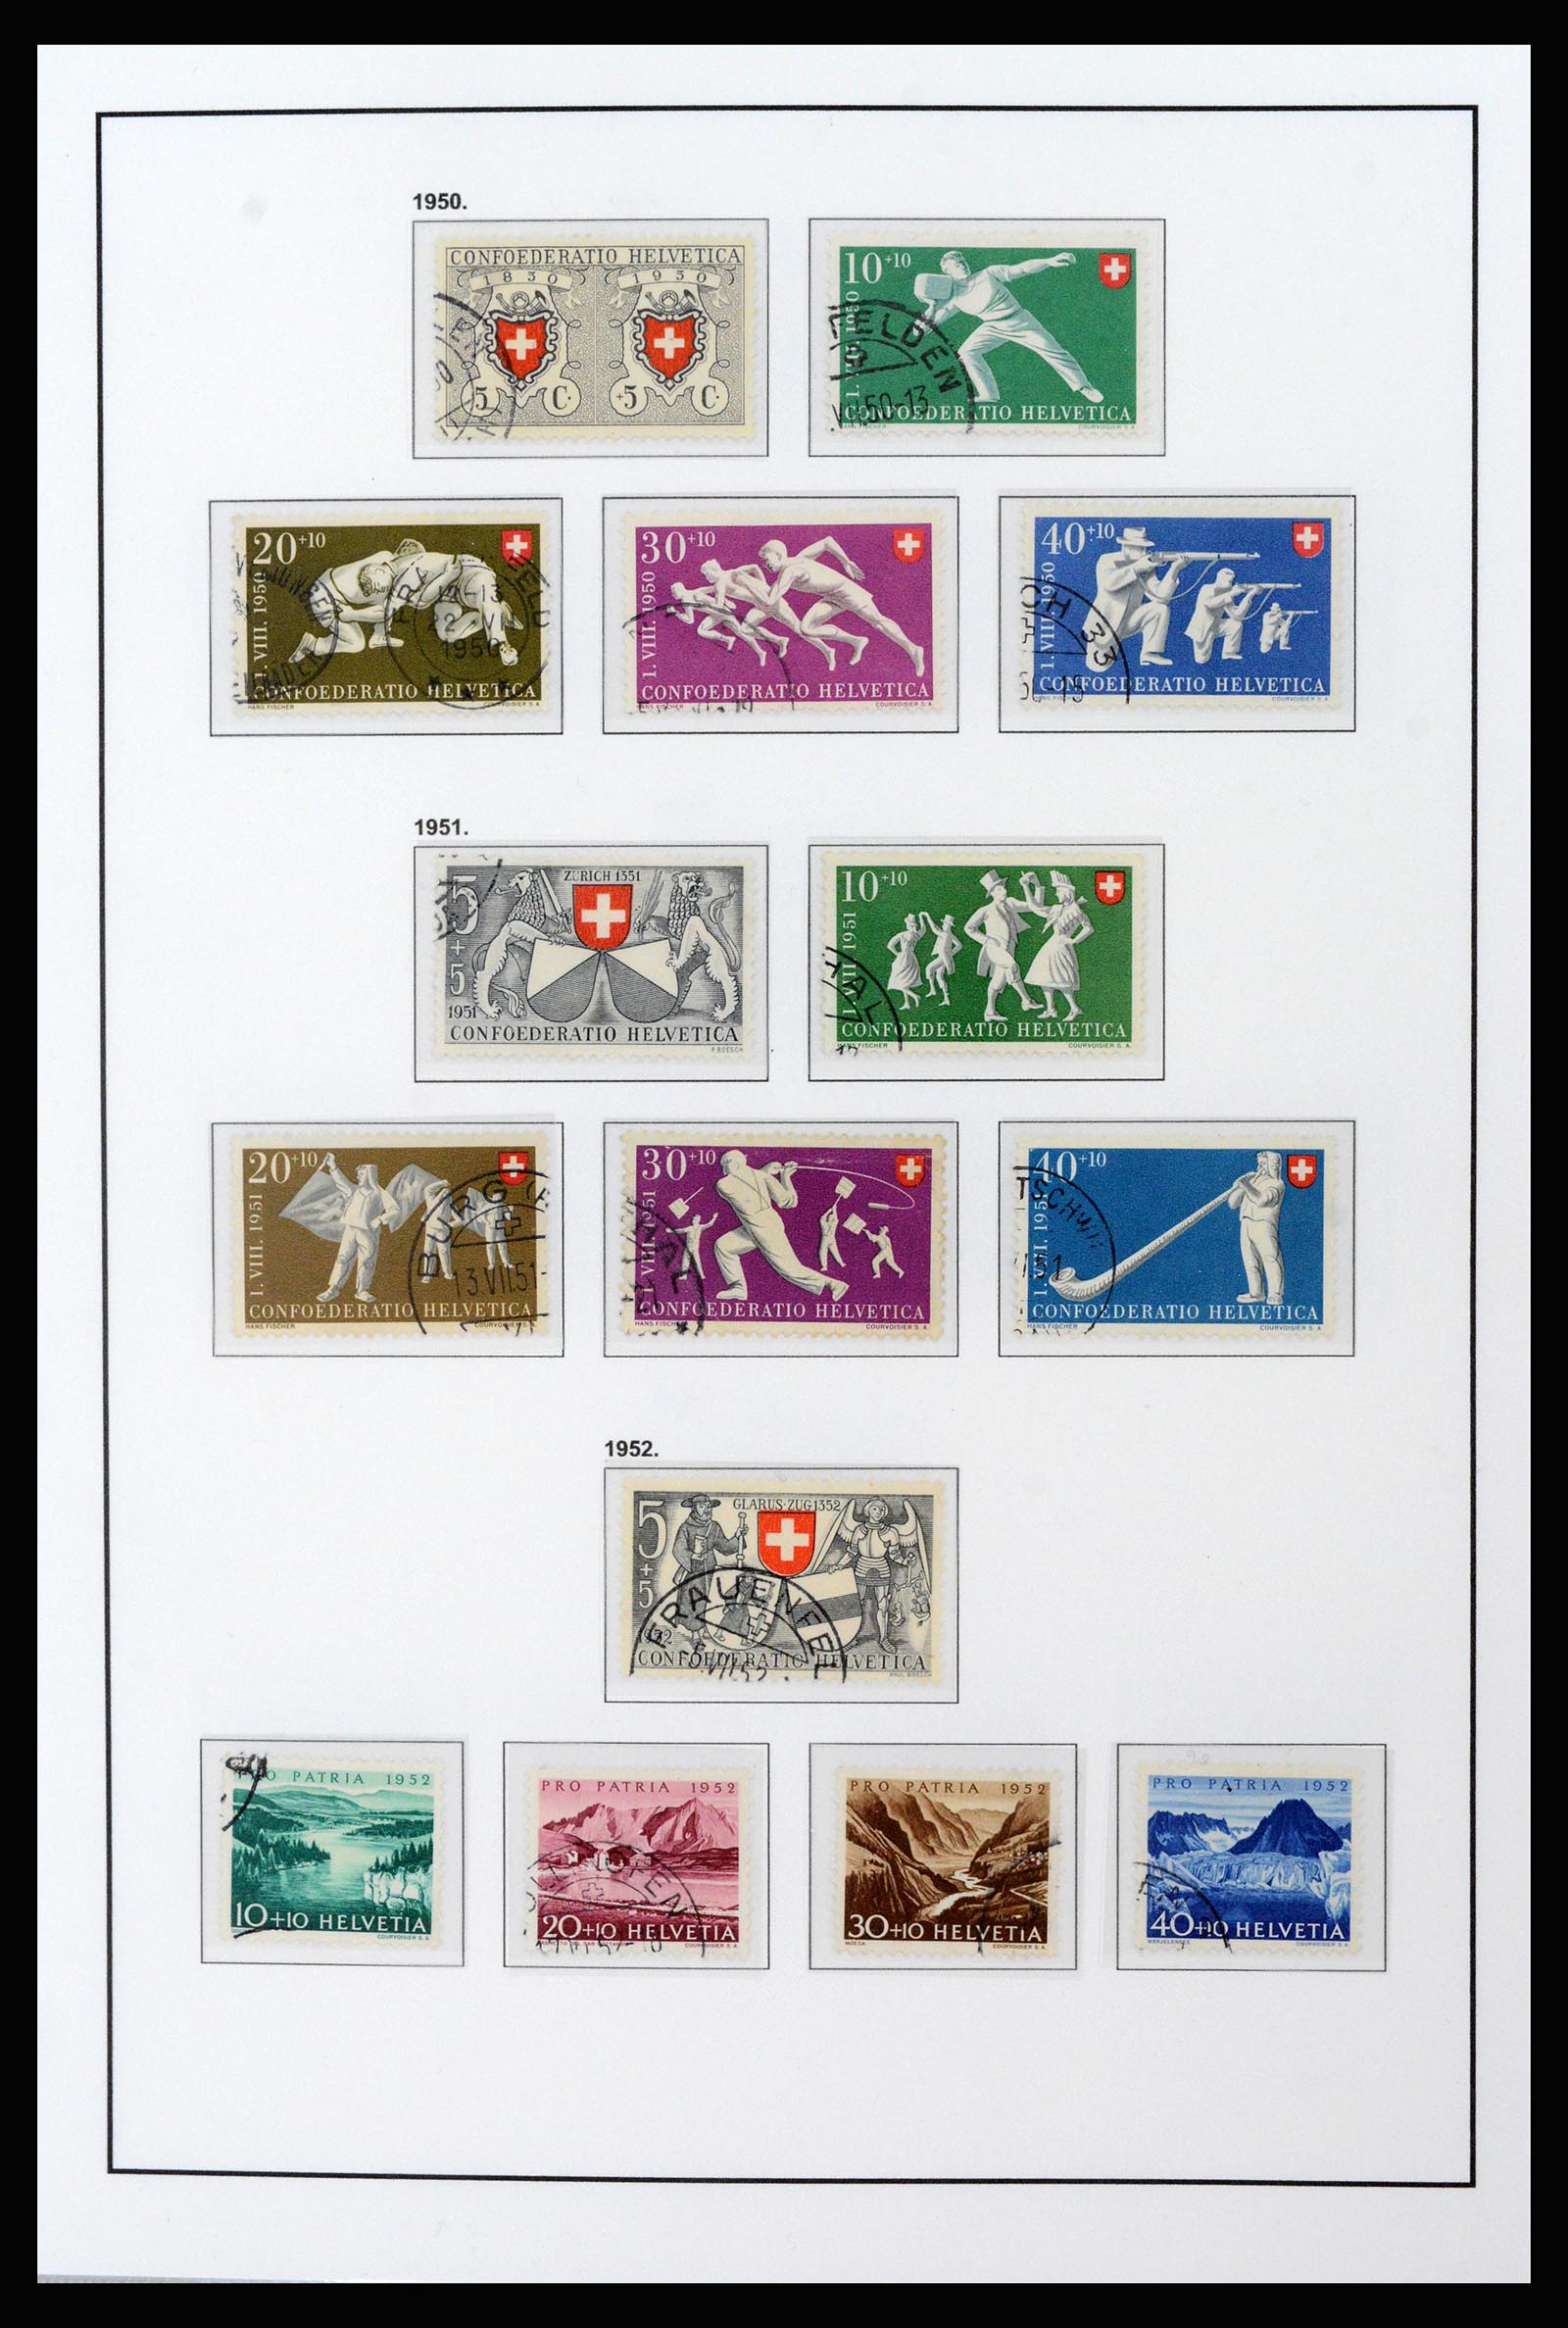 37225 079 - Stamp collection 37225 Switzerland 1854-2020.